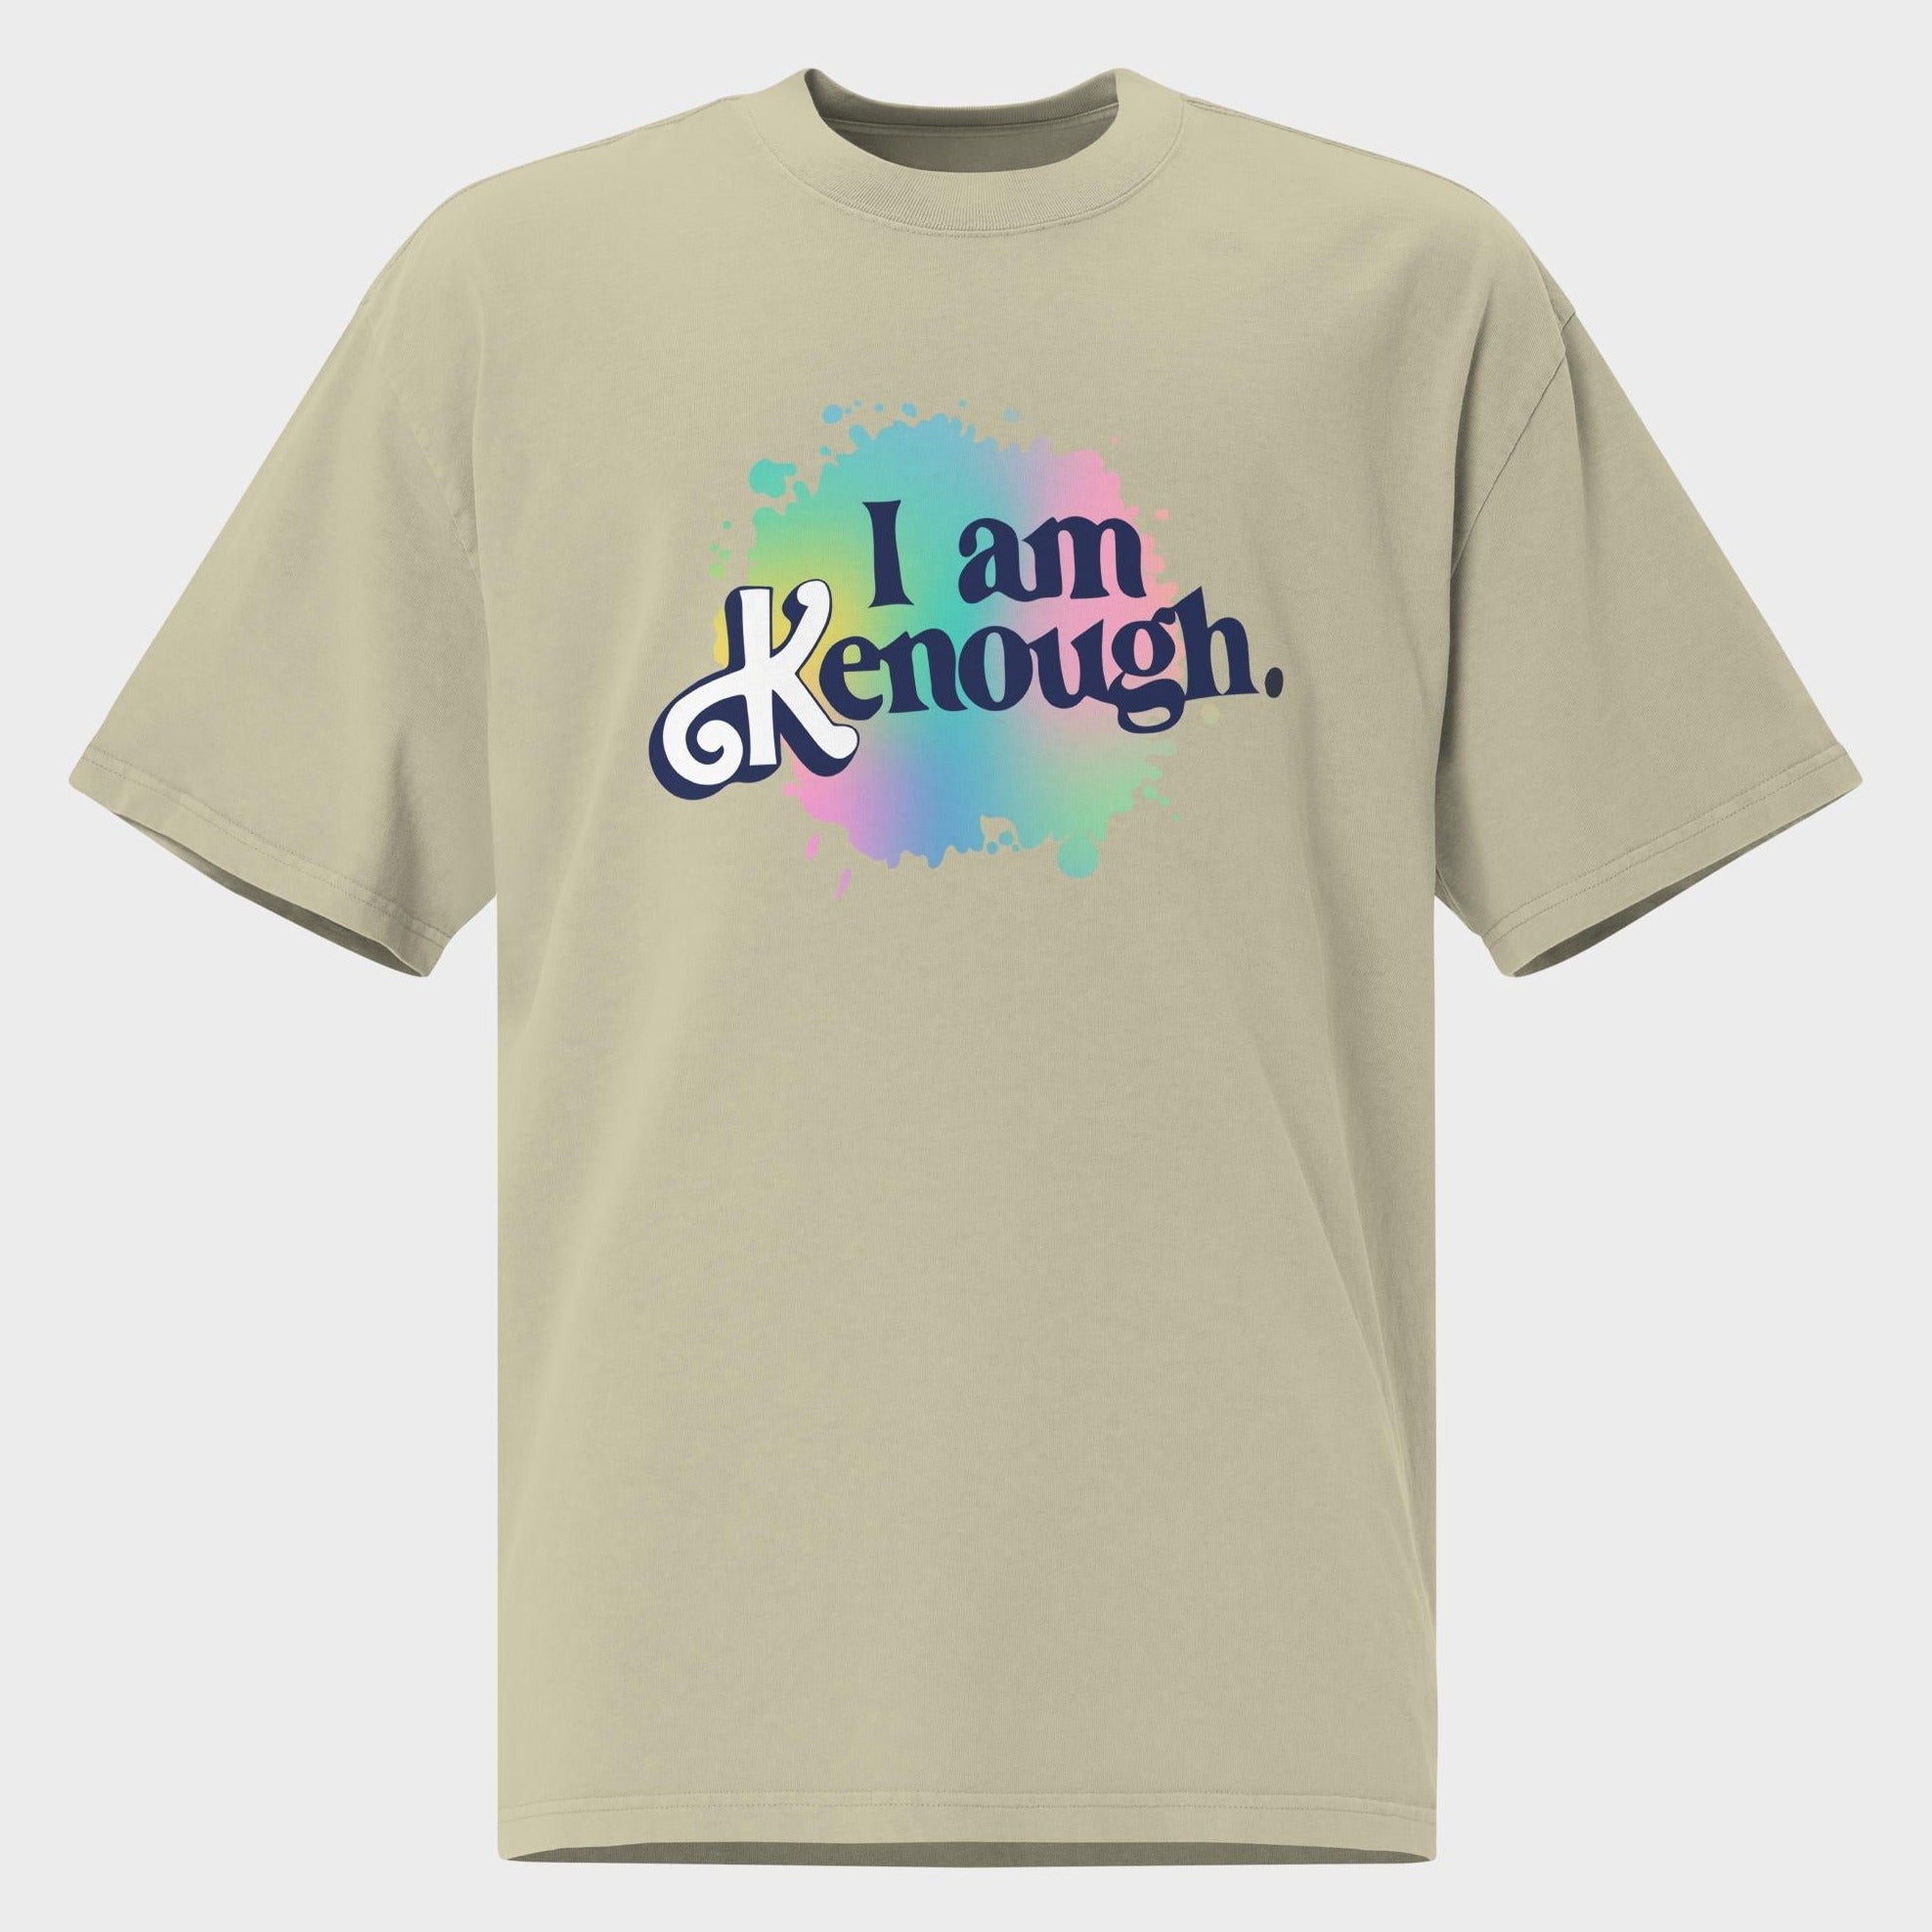 I Am Kenough - Oversized T-Shirt